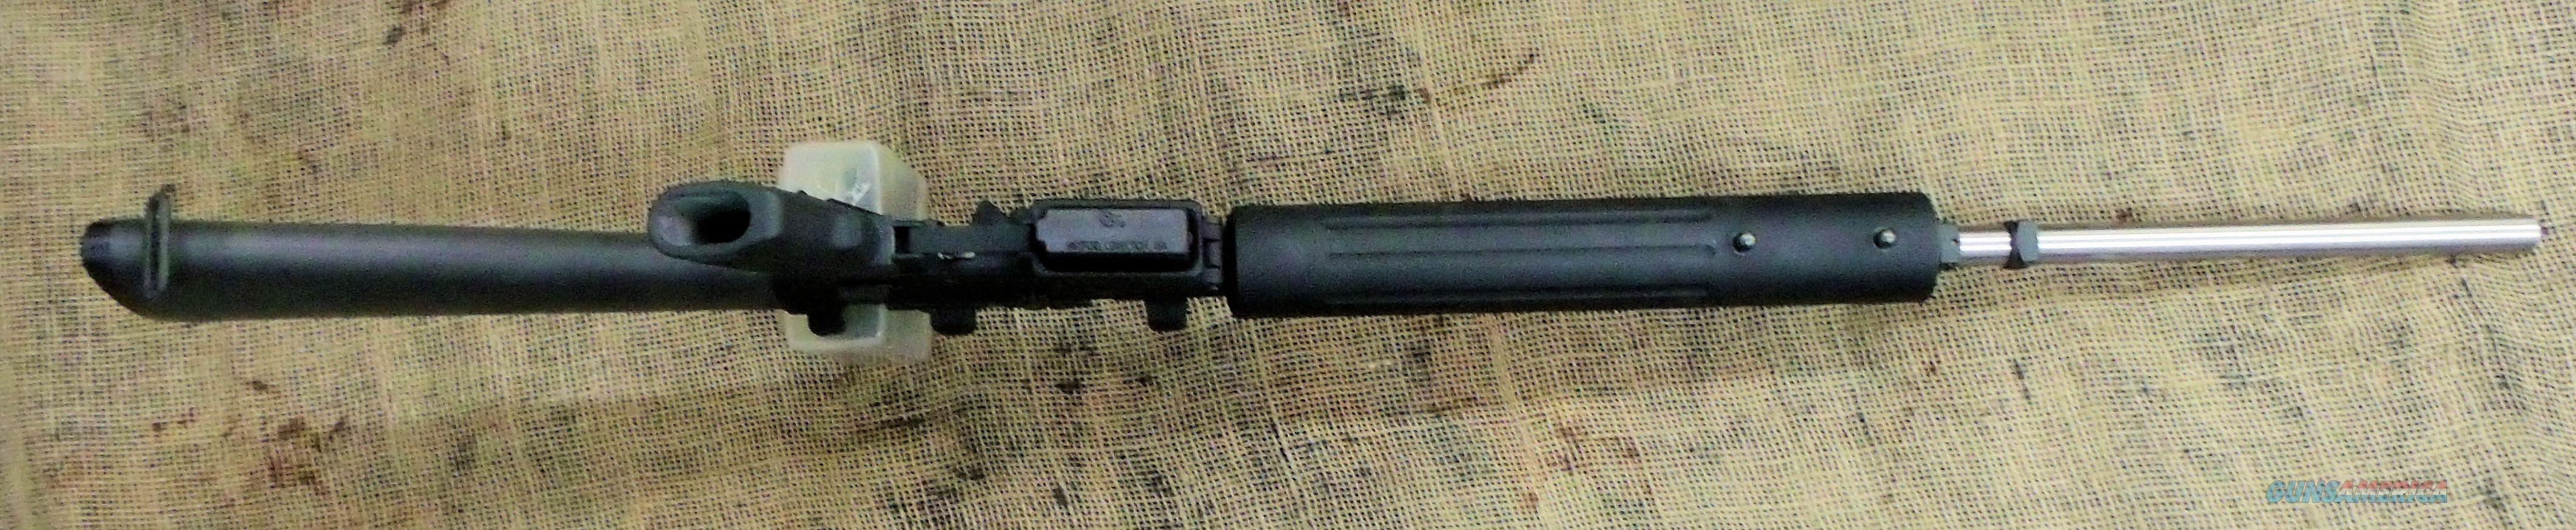 COLT AR15 HBAR Elite R6724 Rifle, 5... for sale at Gunsamerica.com ...